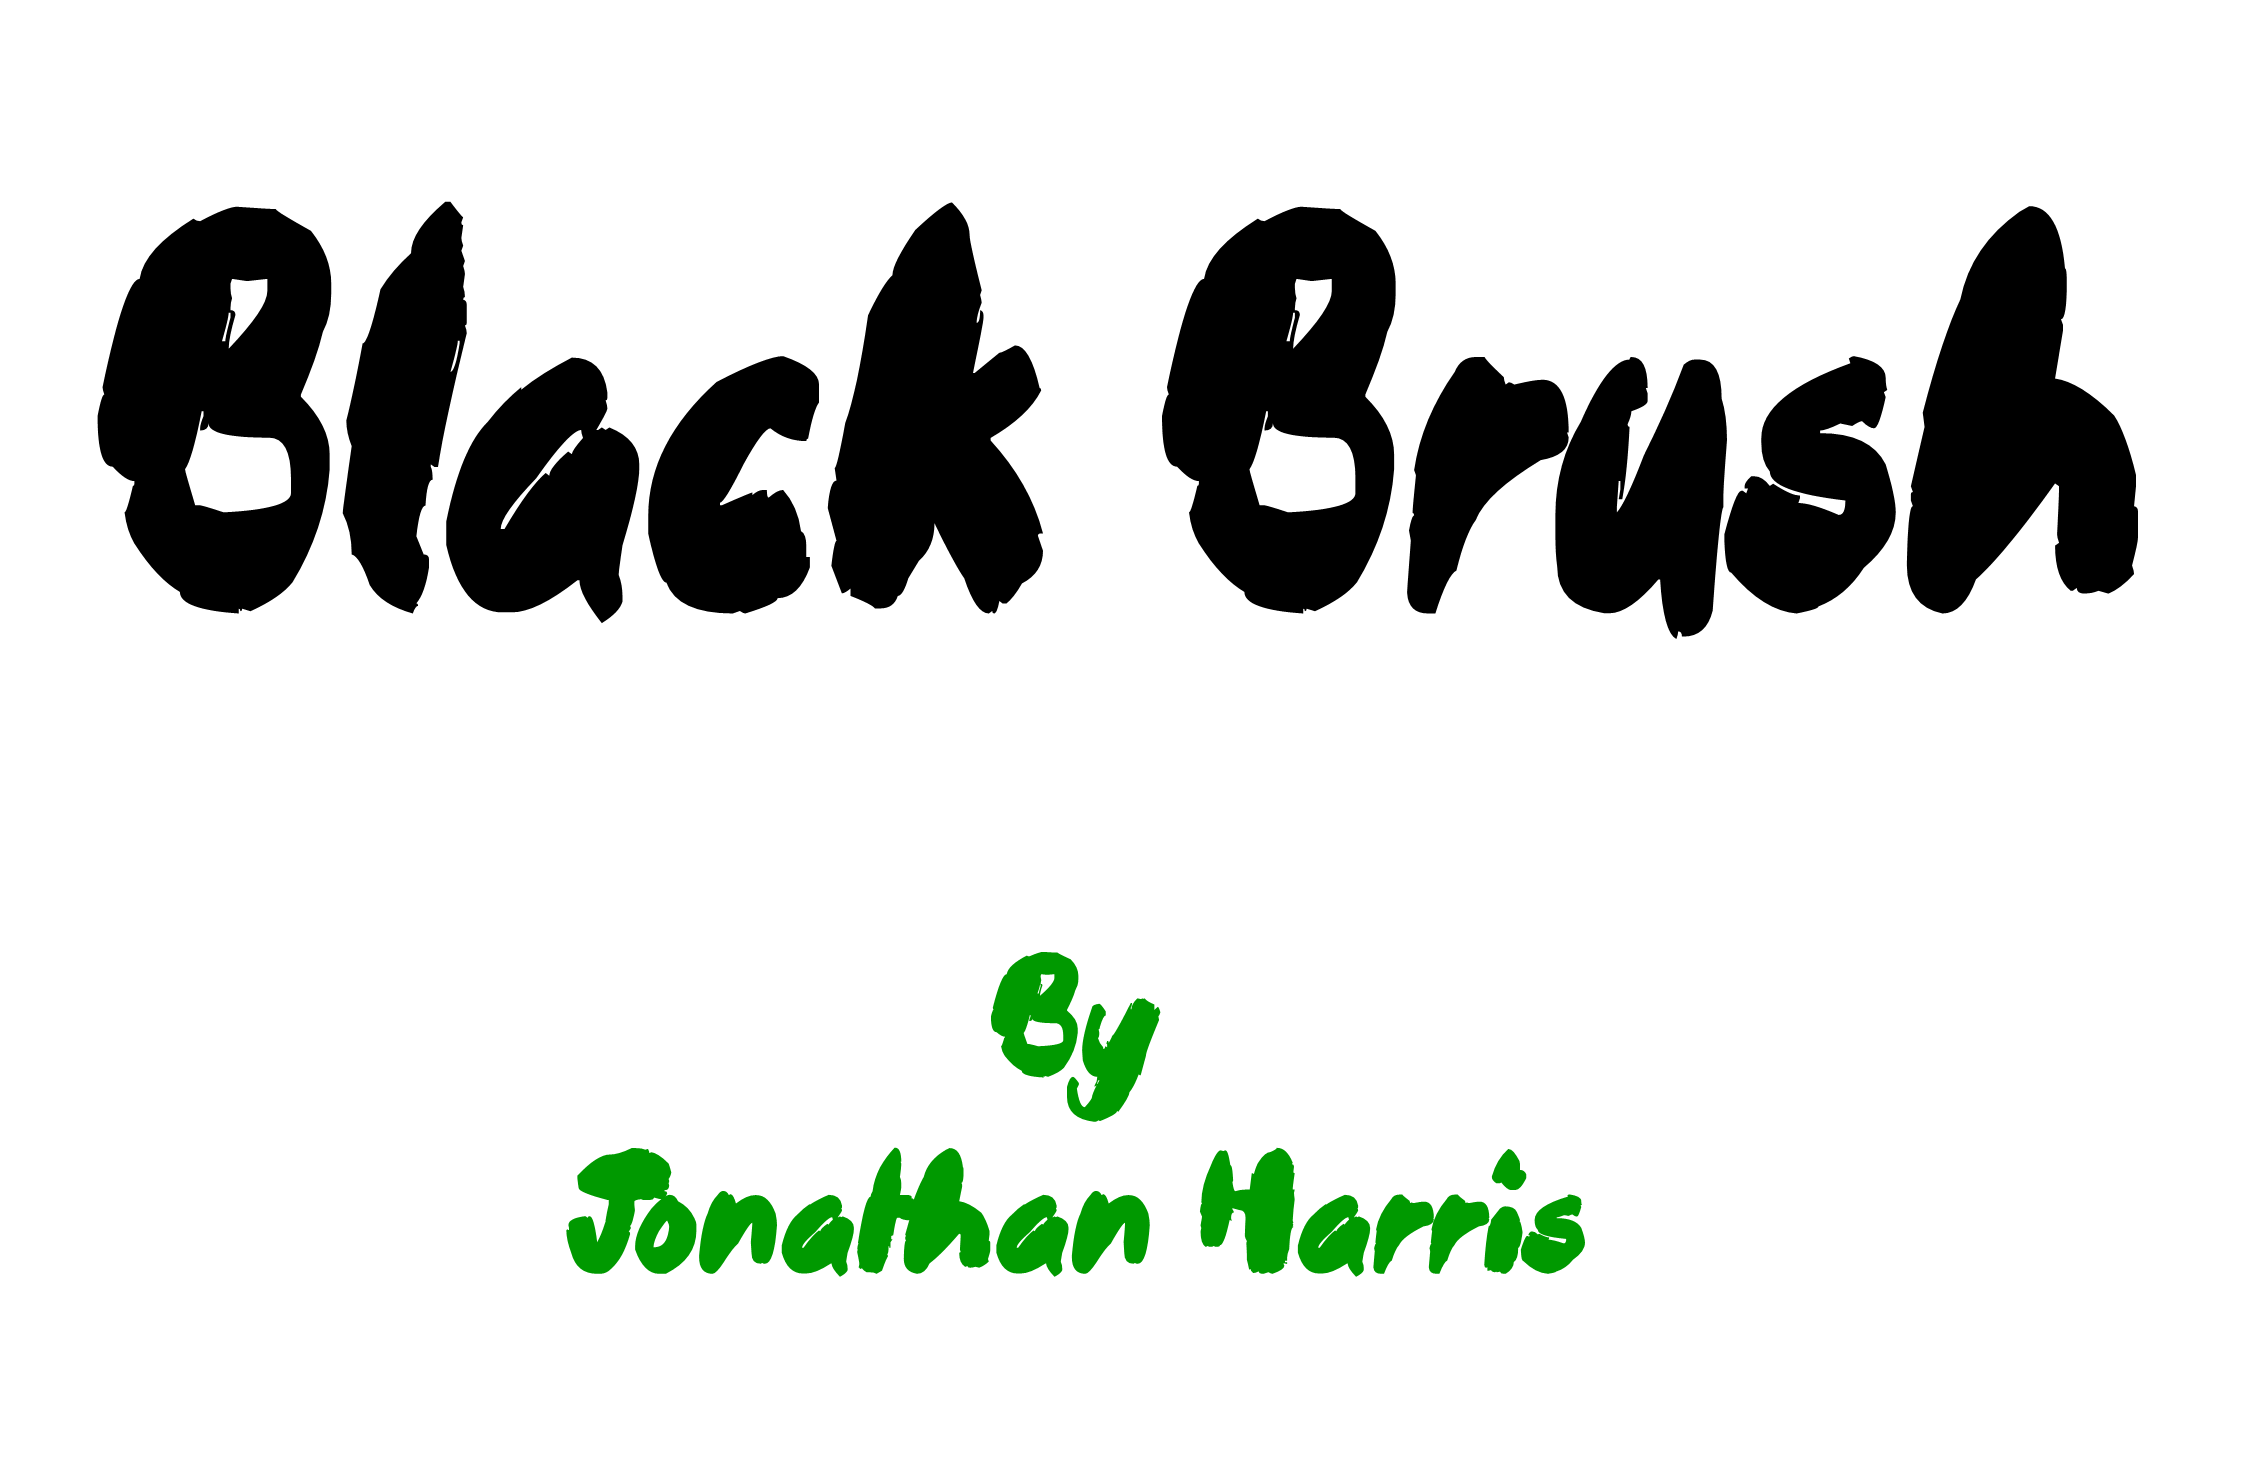 Black Brush